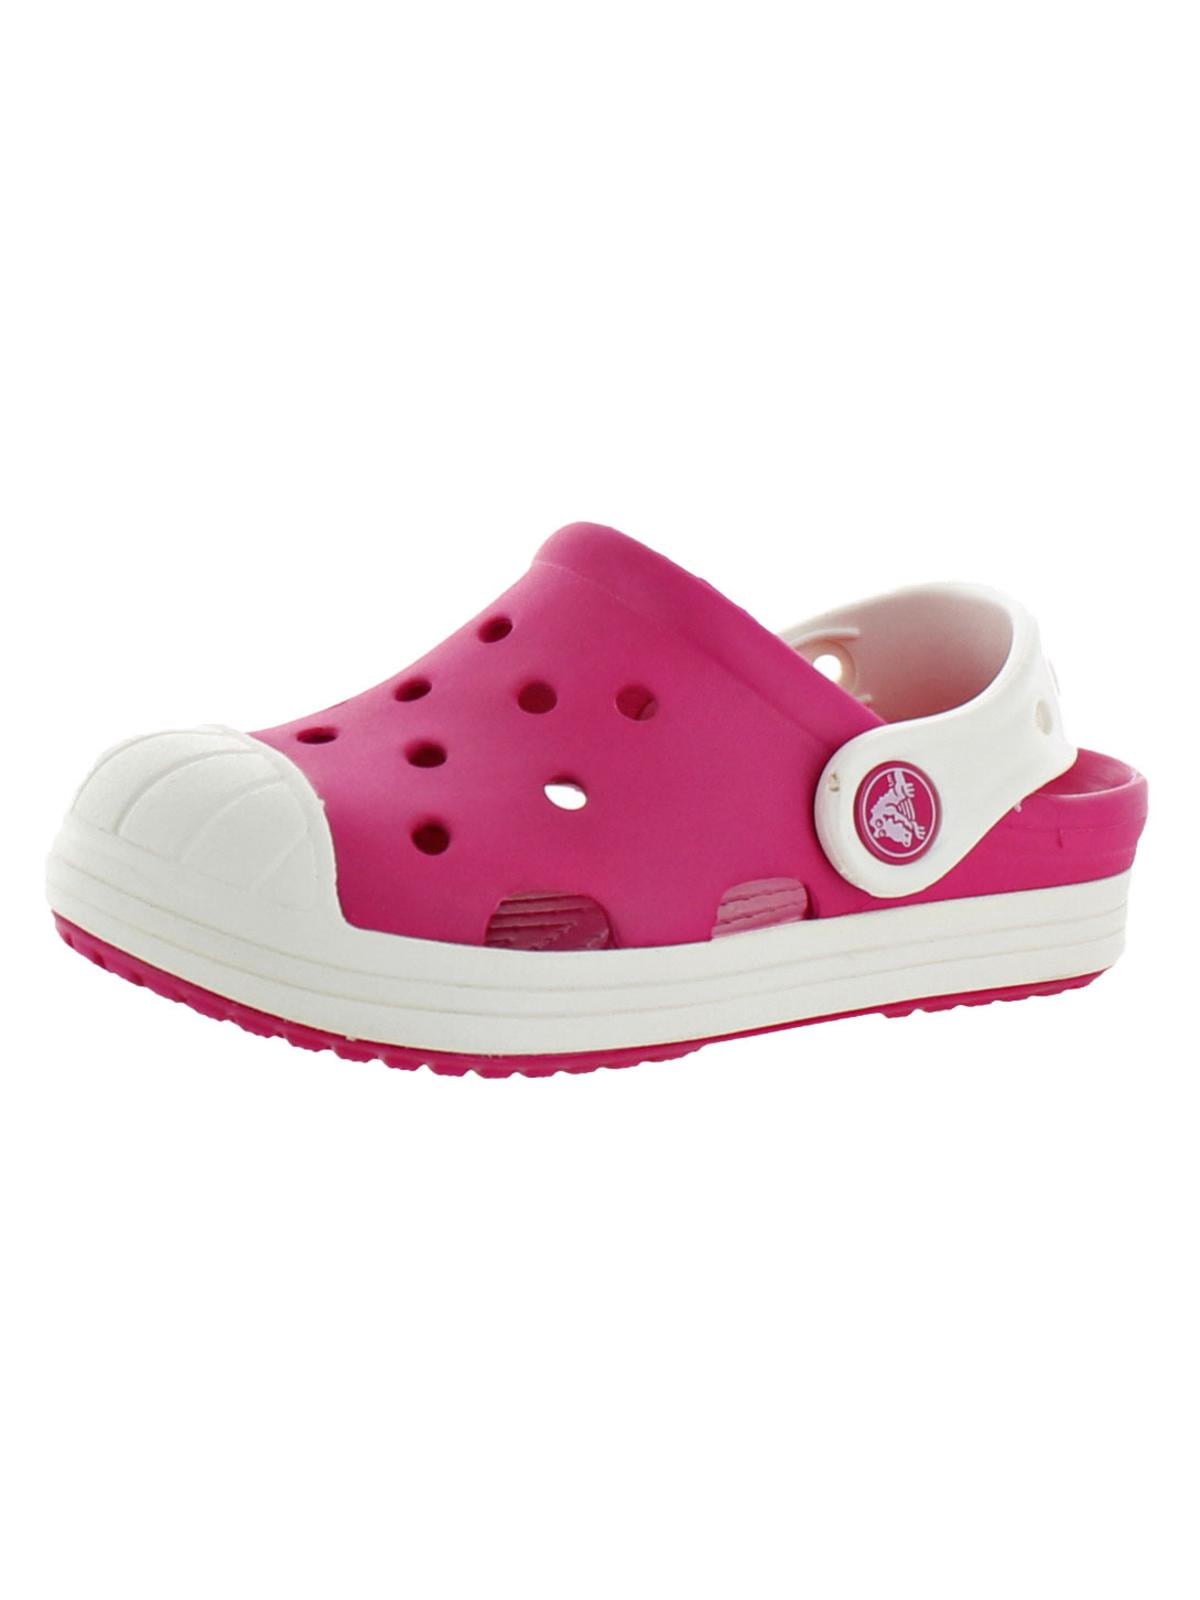 Crocs Bump It Clogs Croslite Lightweight Childrens Kids Boys Girls Shoes Sandals 